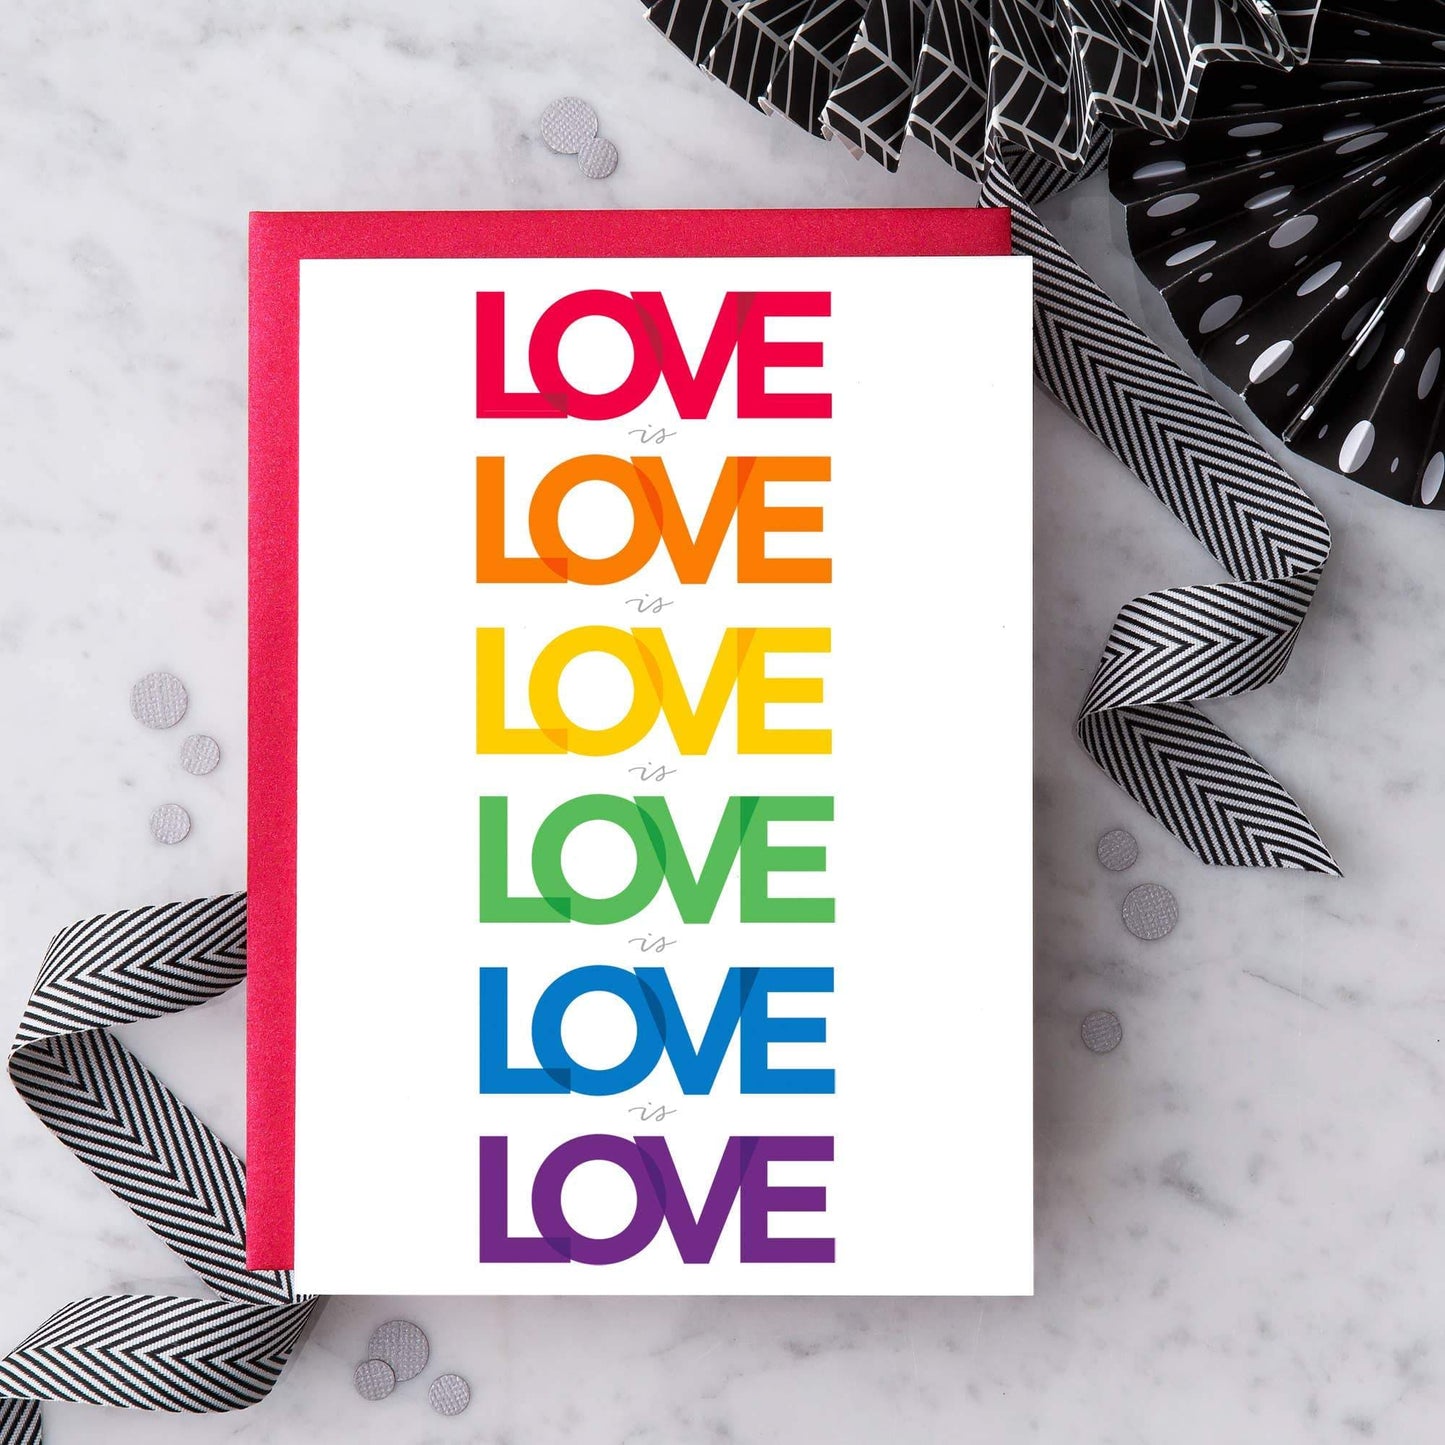 "Love is Love is Love" Greeting Card